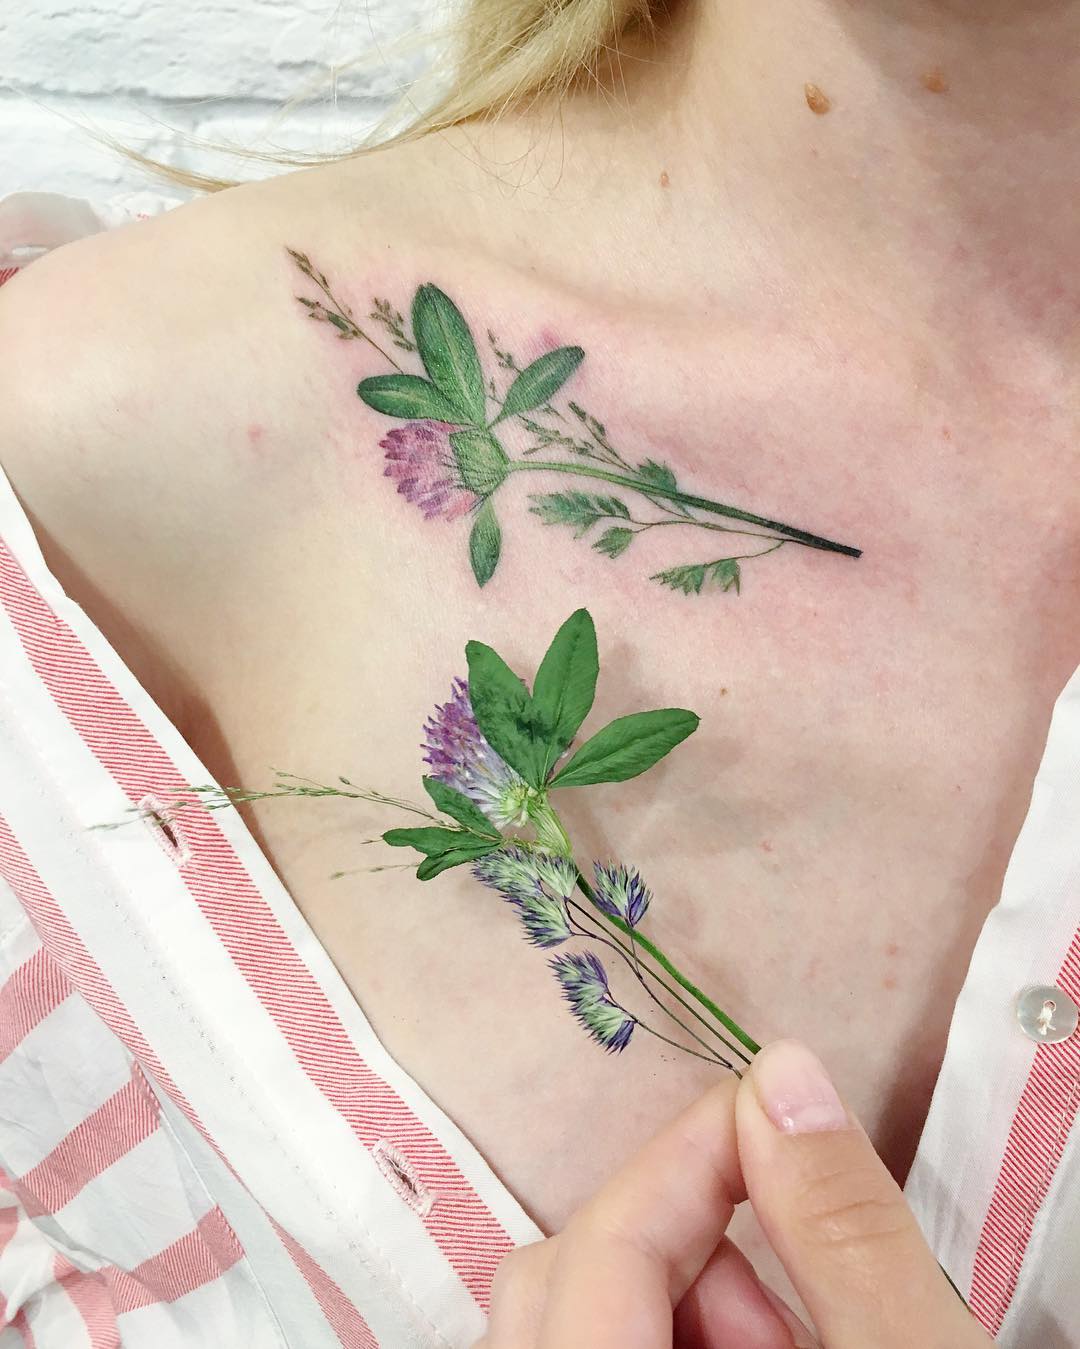 Tattoo Artist Χρησιμοποιεί Αληθινά Φύλλα και Λουλούδια για Μοναδικά Τατουάζ...! - Εικόνα 15